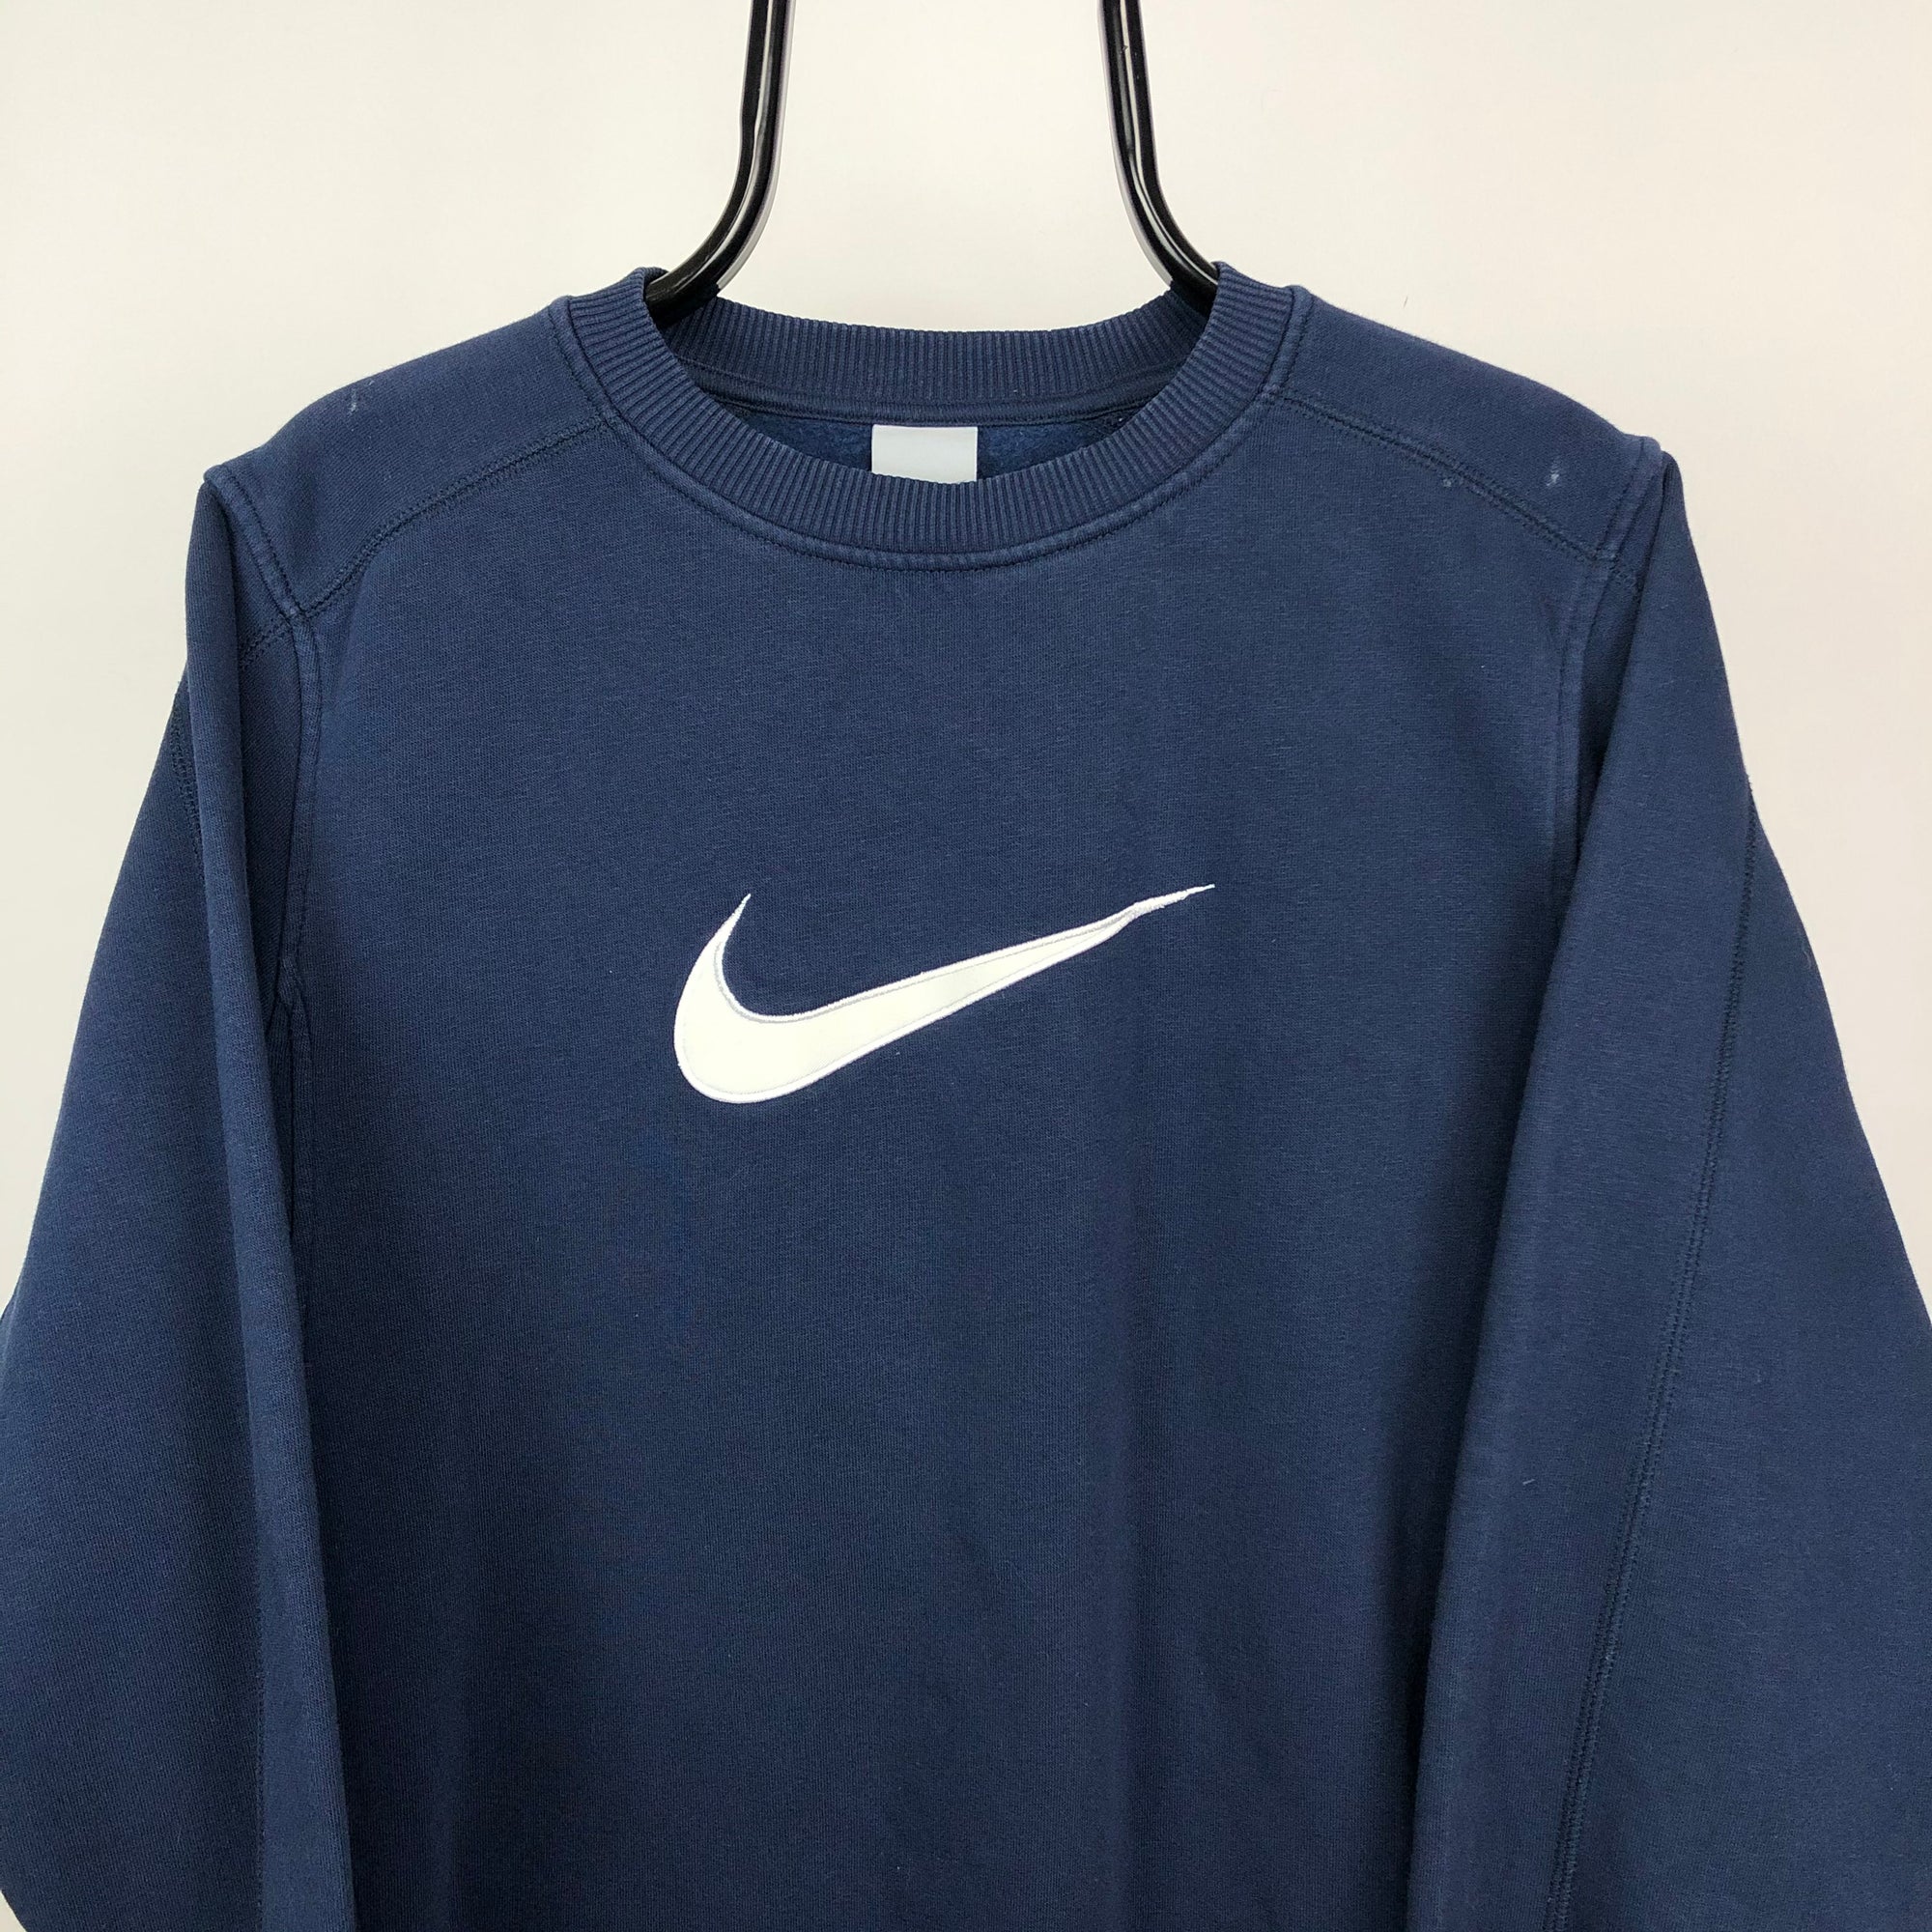 Vintage Nike Big Swoosh Sweatshirt in Navy - Men's Medium/Women's Large